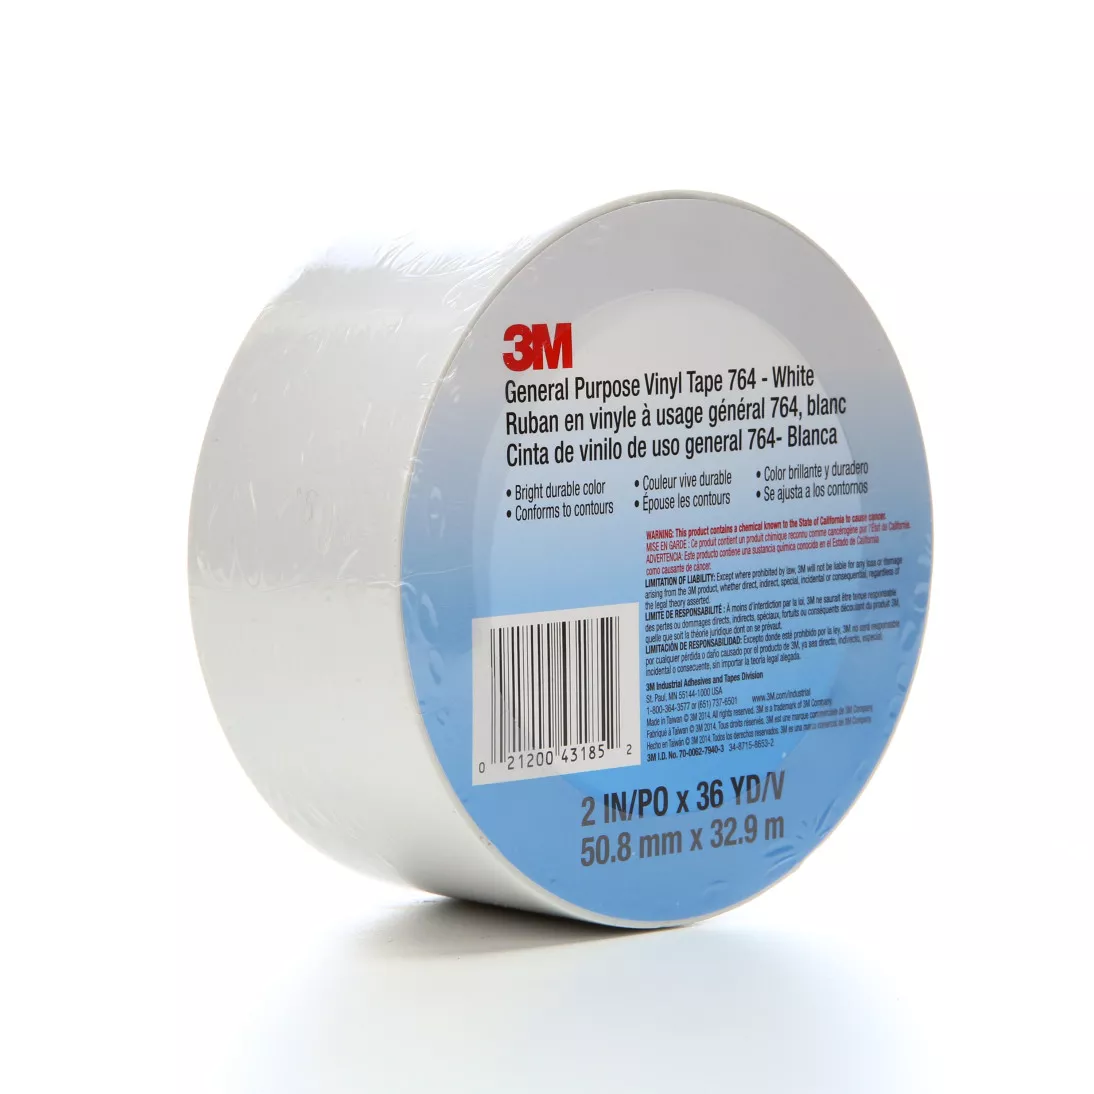 3M™ General Purpose Vinyl Tape 764, White, 50.8 mm x 32.9 m, 5 mil, 24 Roll/Case